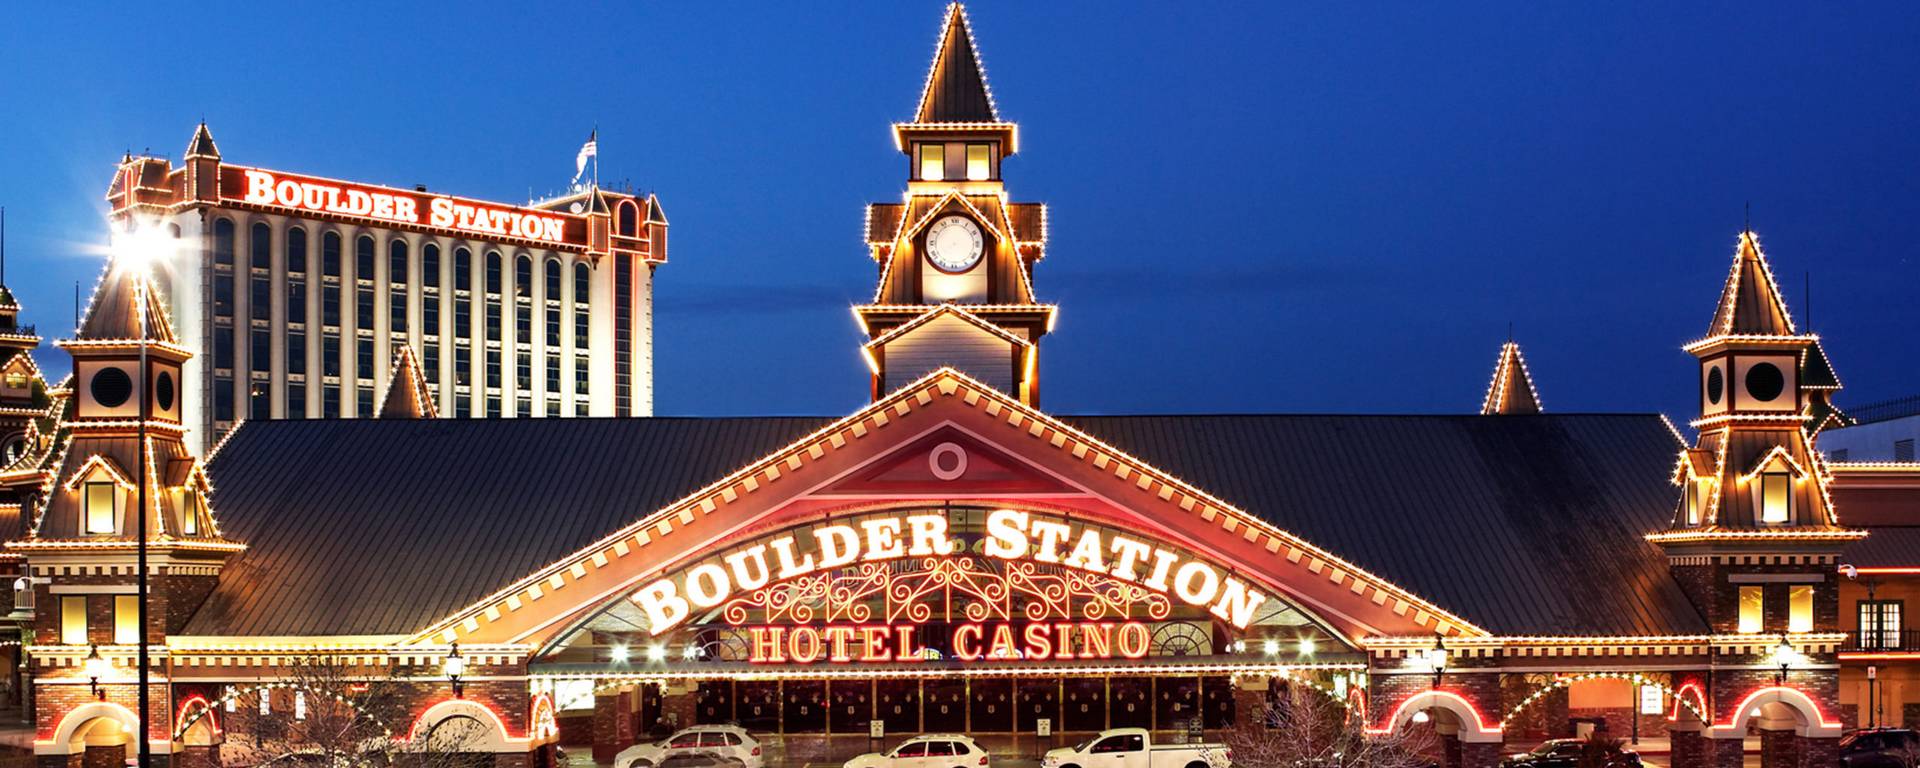 boulder station casino hotel las vegas nv